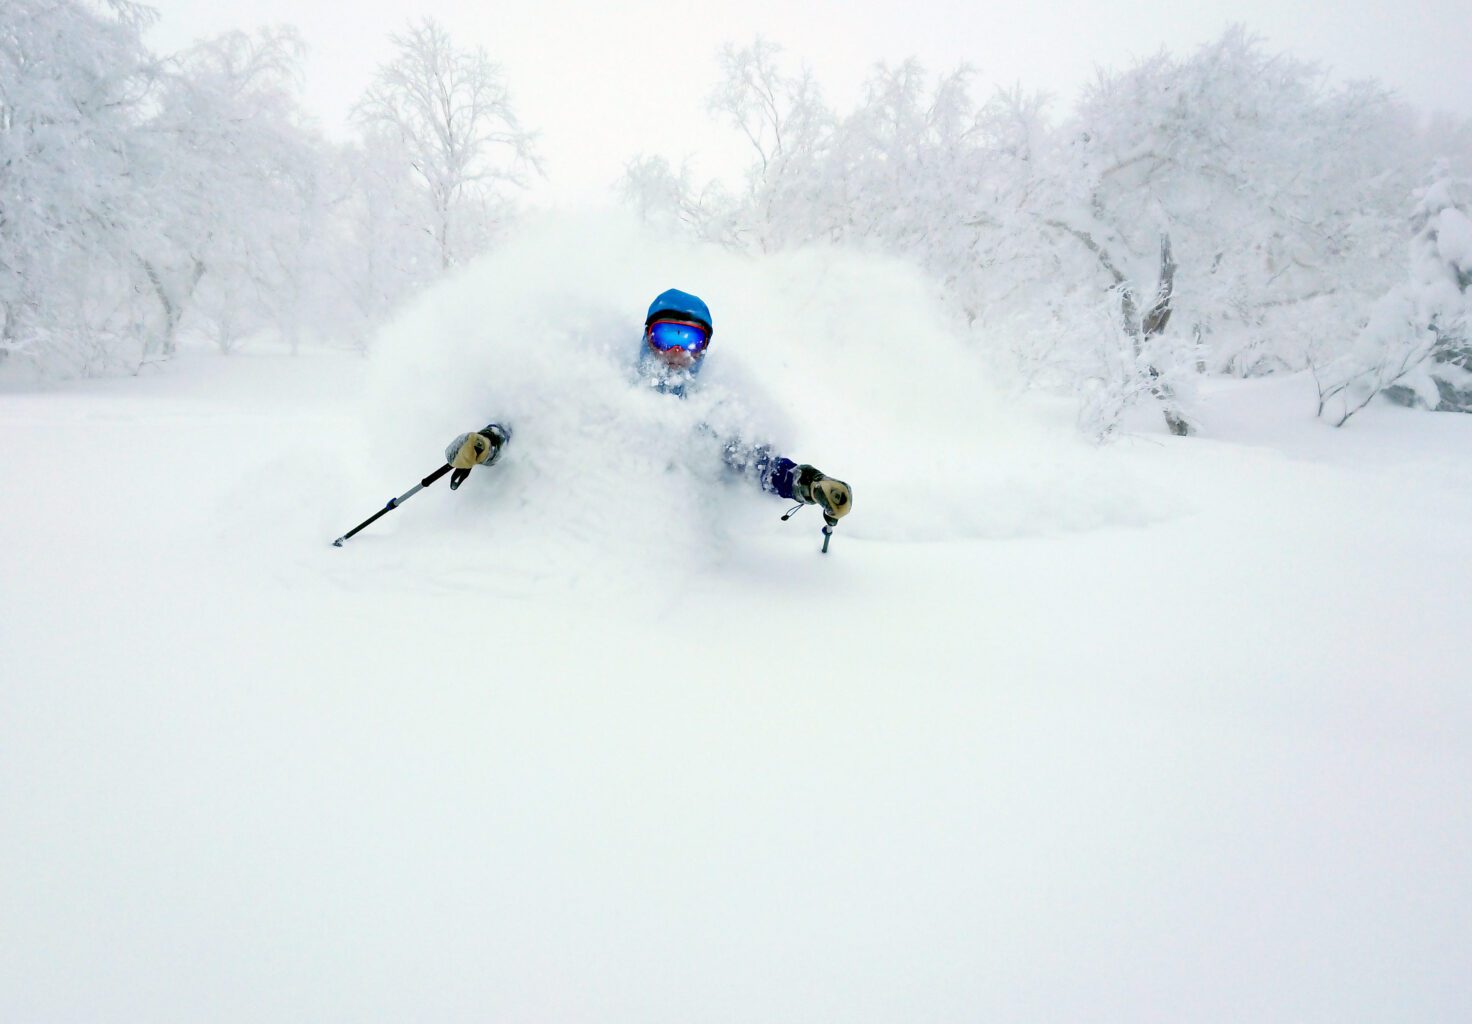 skier skiing into powder snow in japan